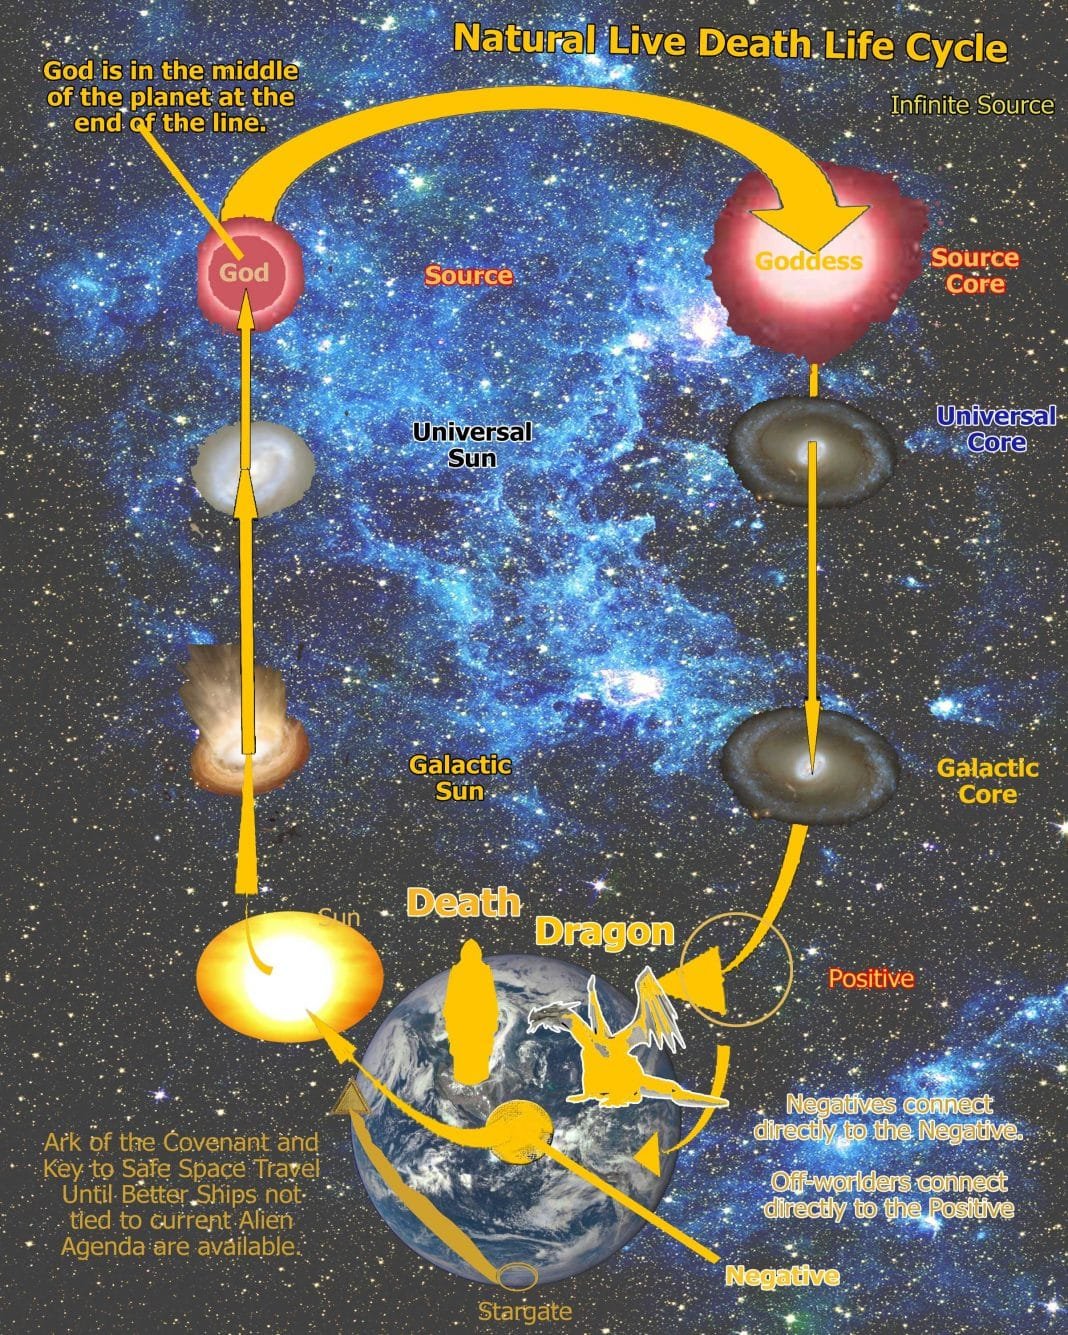 Cosmos Chart